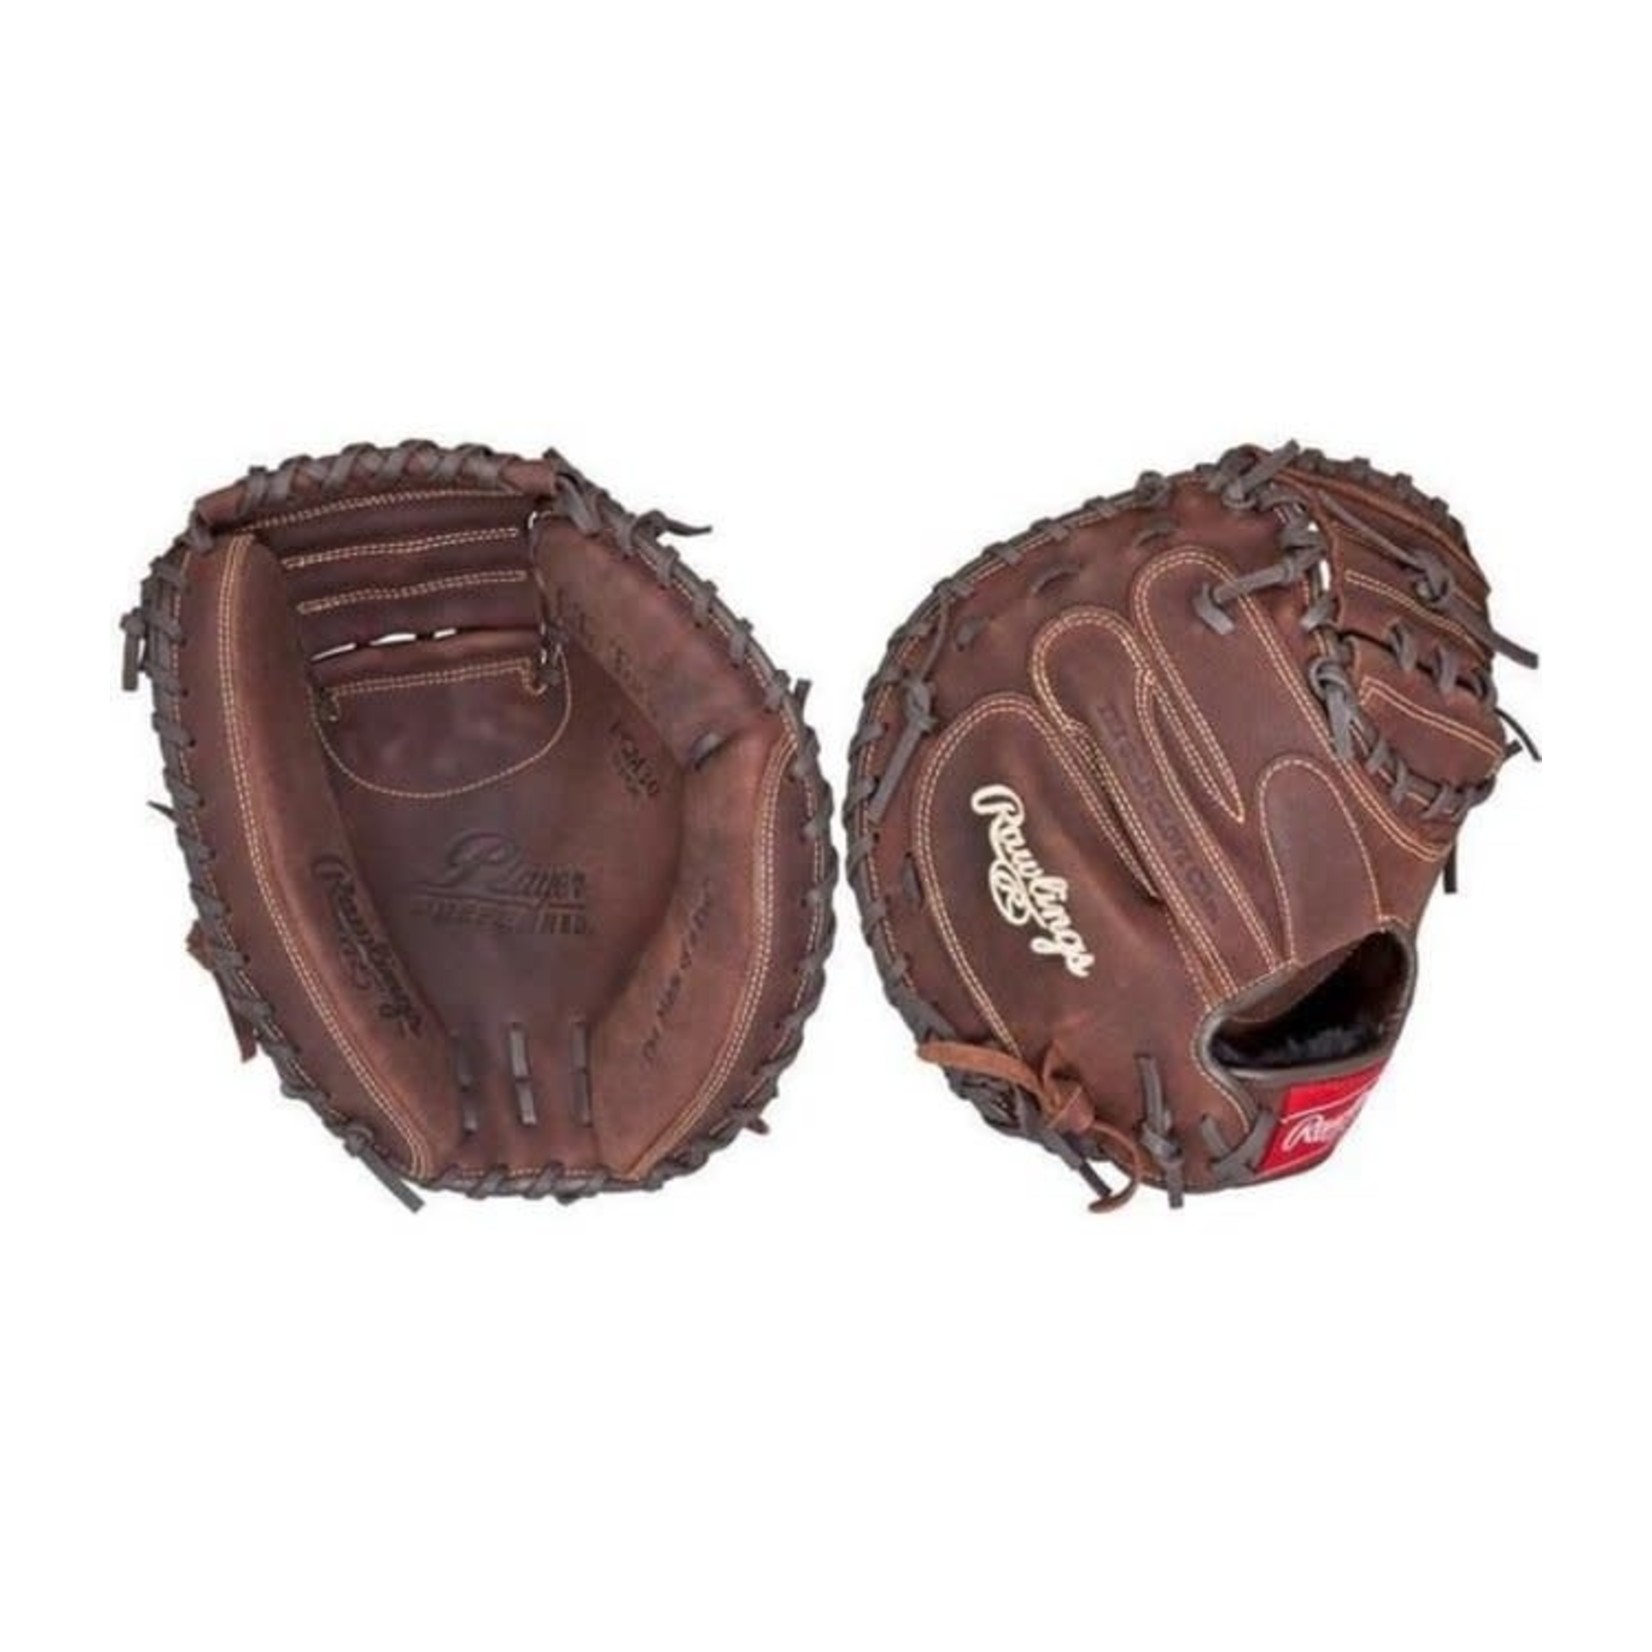 Rawlings Rawlings Baseball Glove, Player Preferred PCM30, 33", Reg, Catchers Mitt